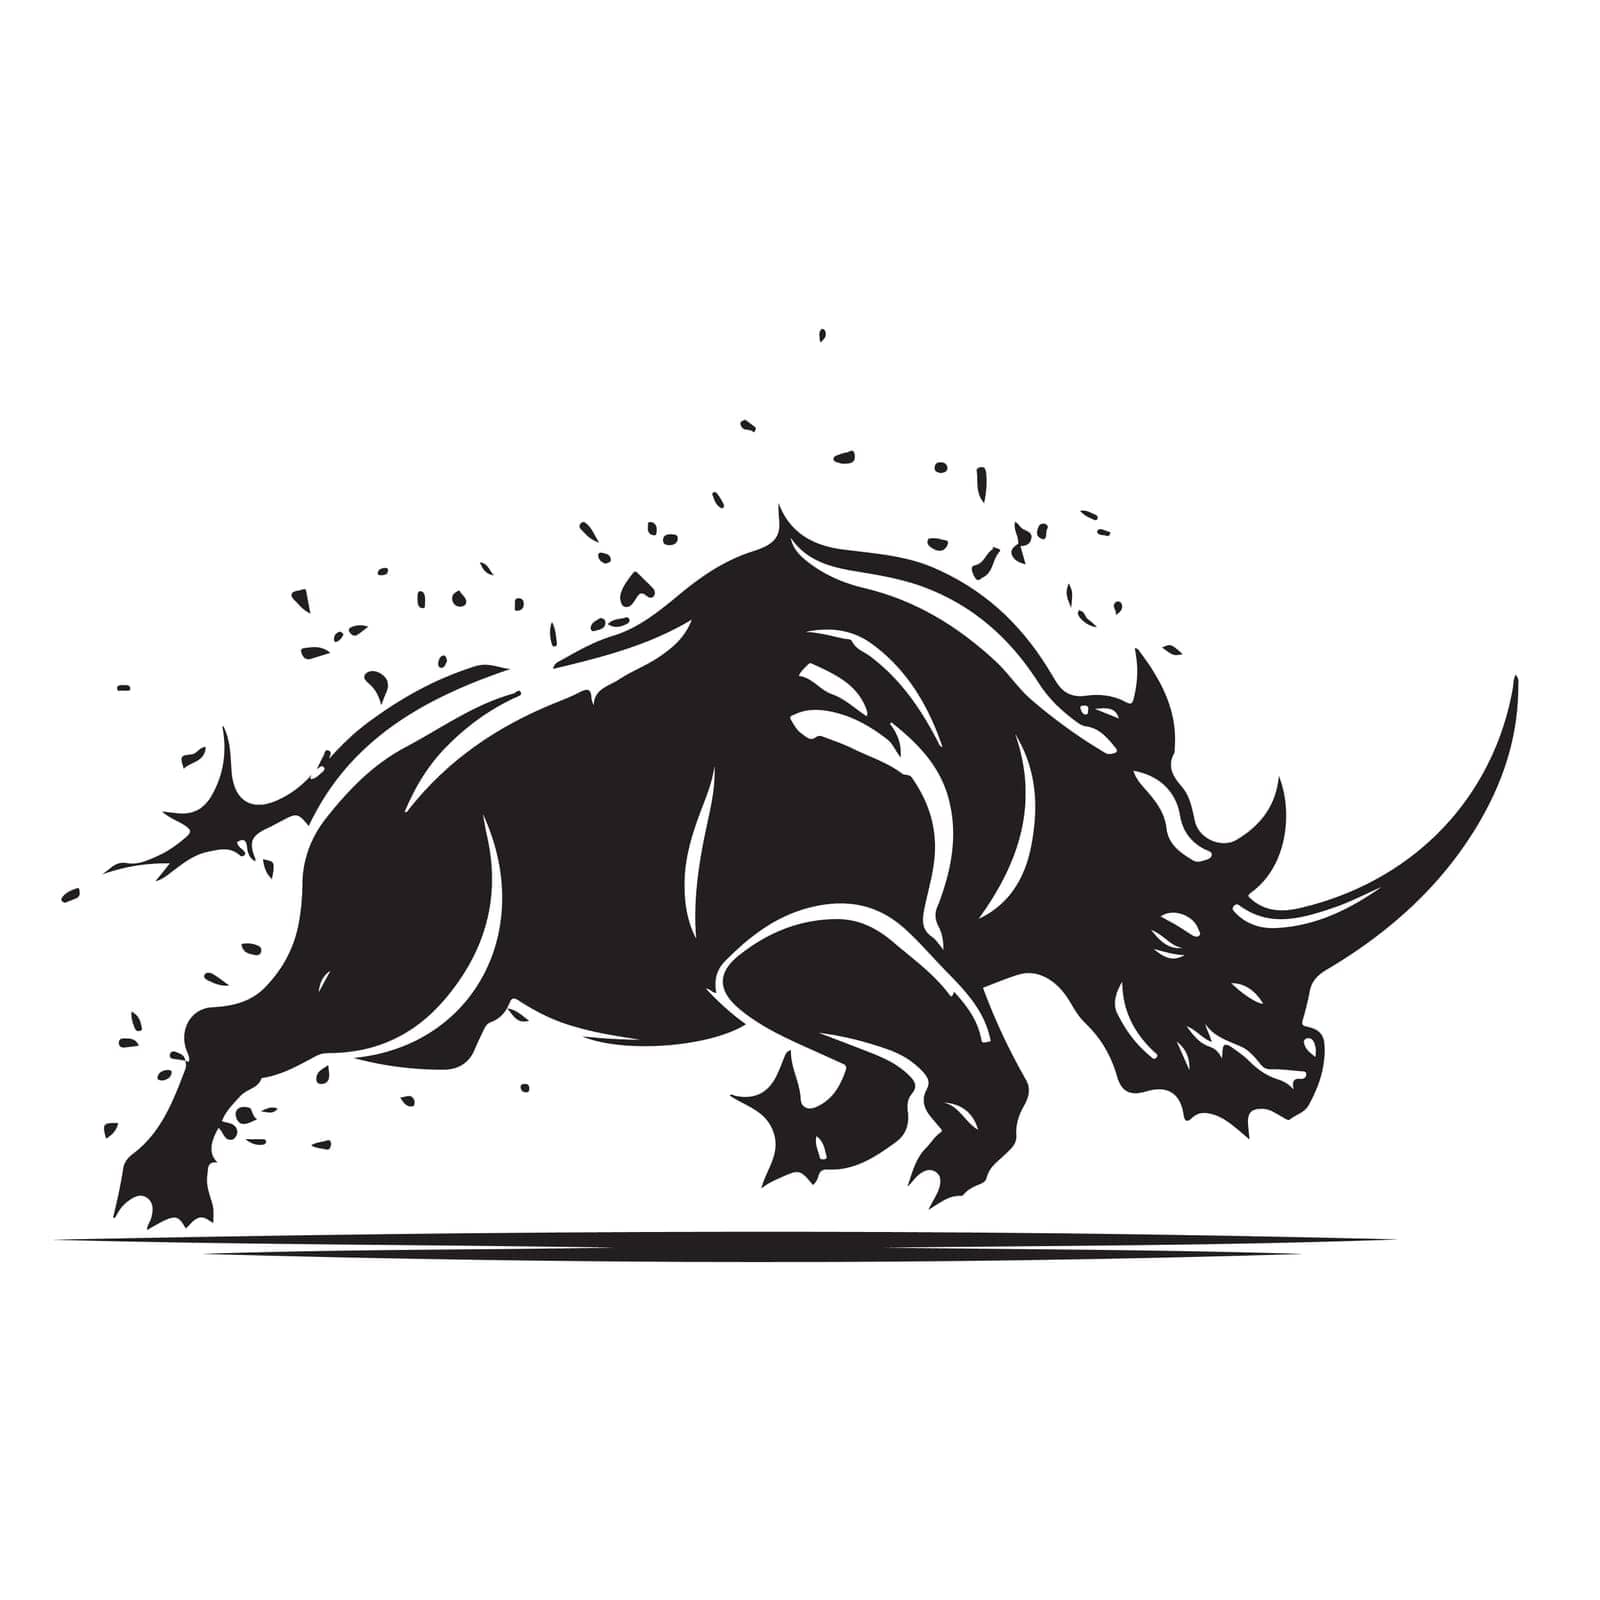 Rhino logo template. Endangered African Rhinoceros silhouette icon. Horned animal symbol. Vector illustration